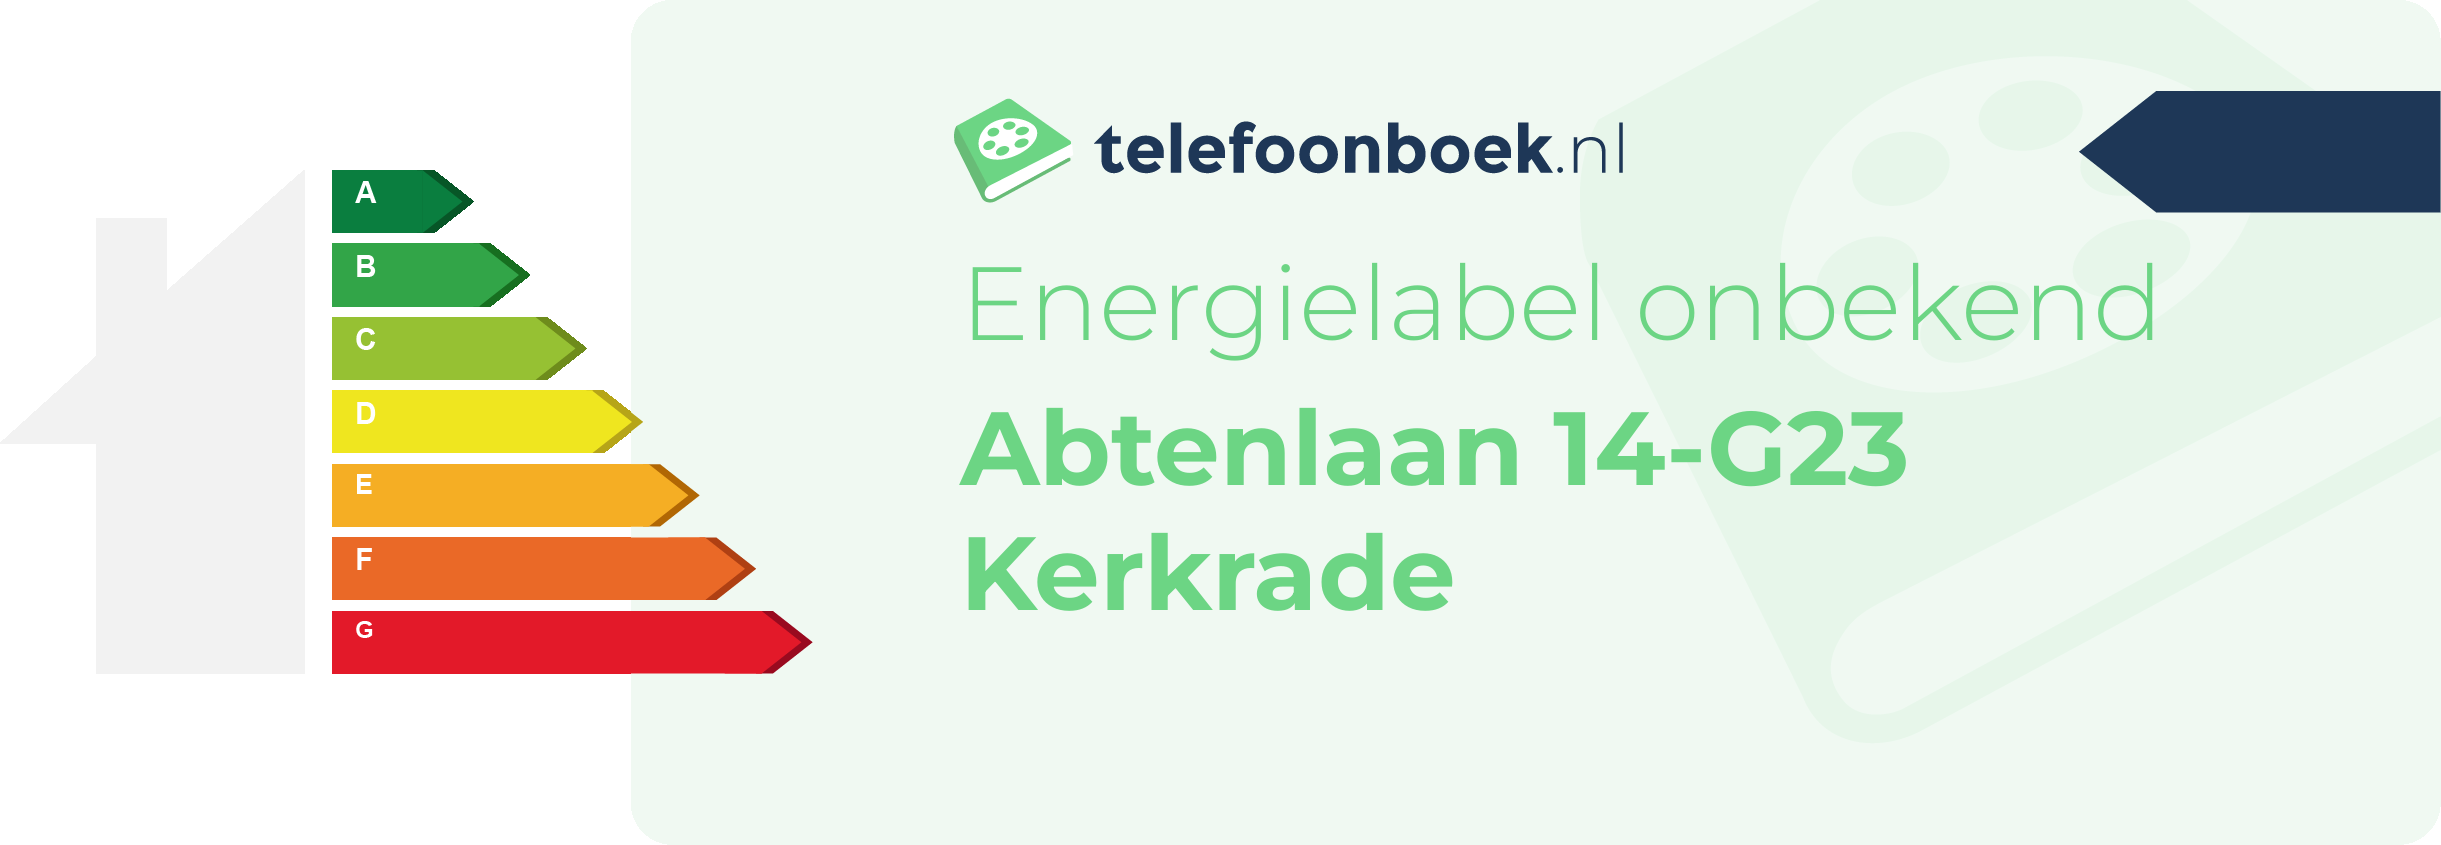 Energielabel Abtenlaan 14-G23 Kerkrade